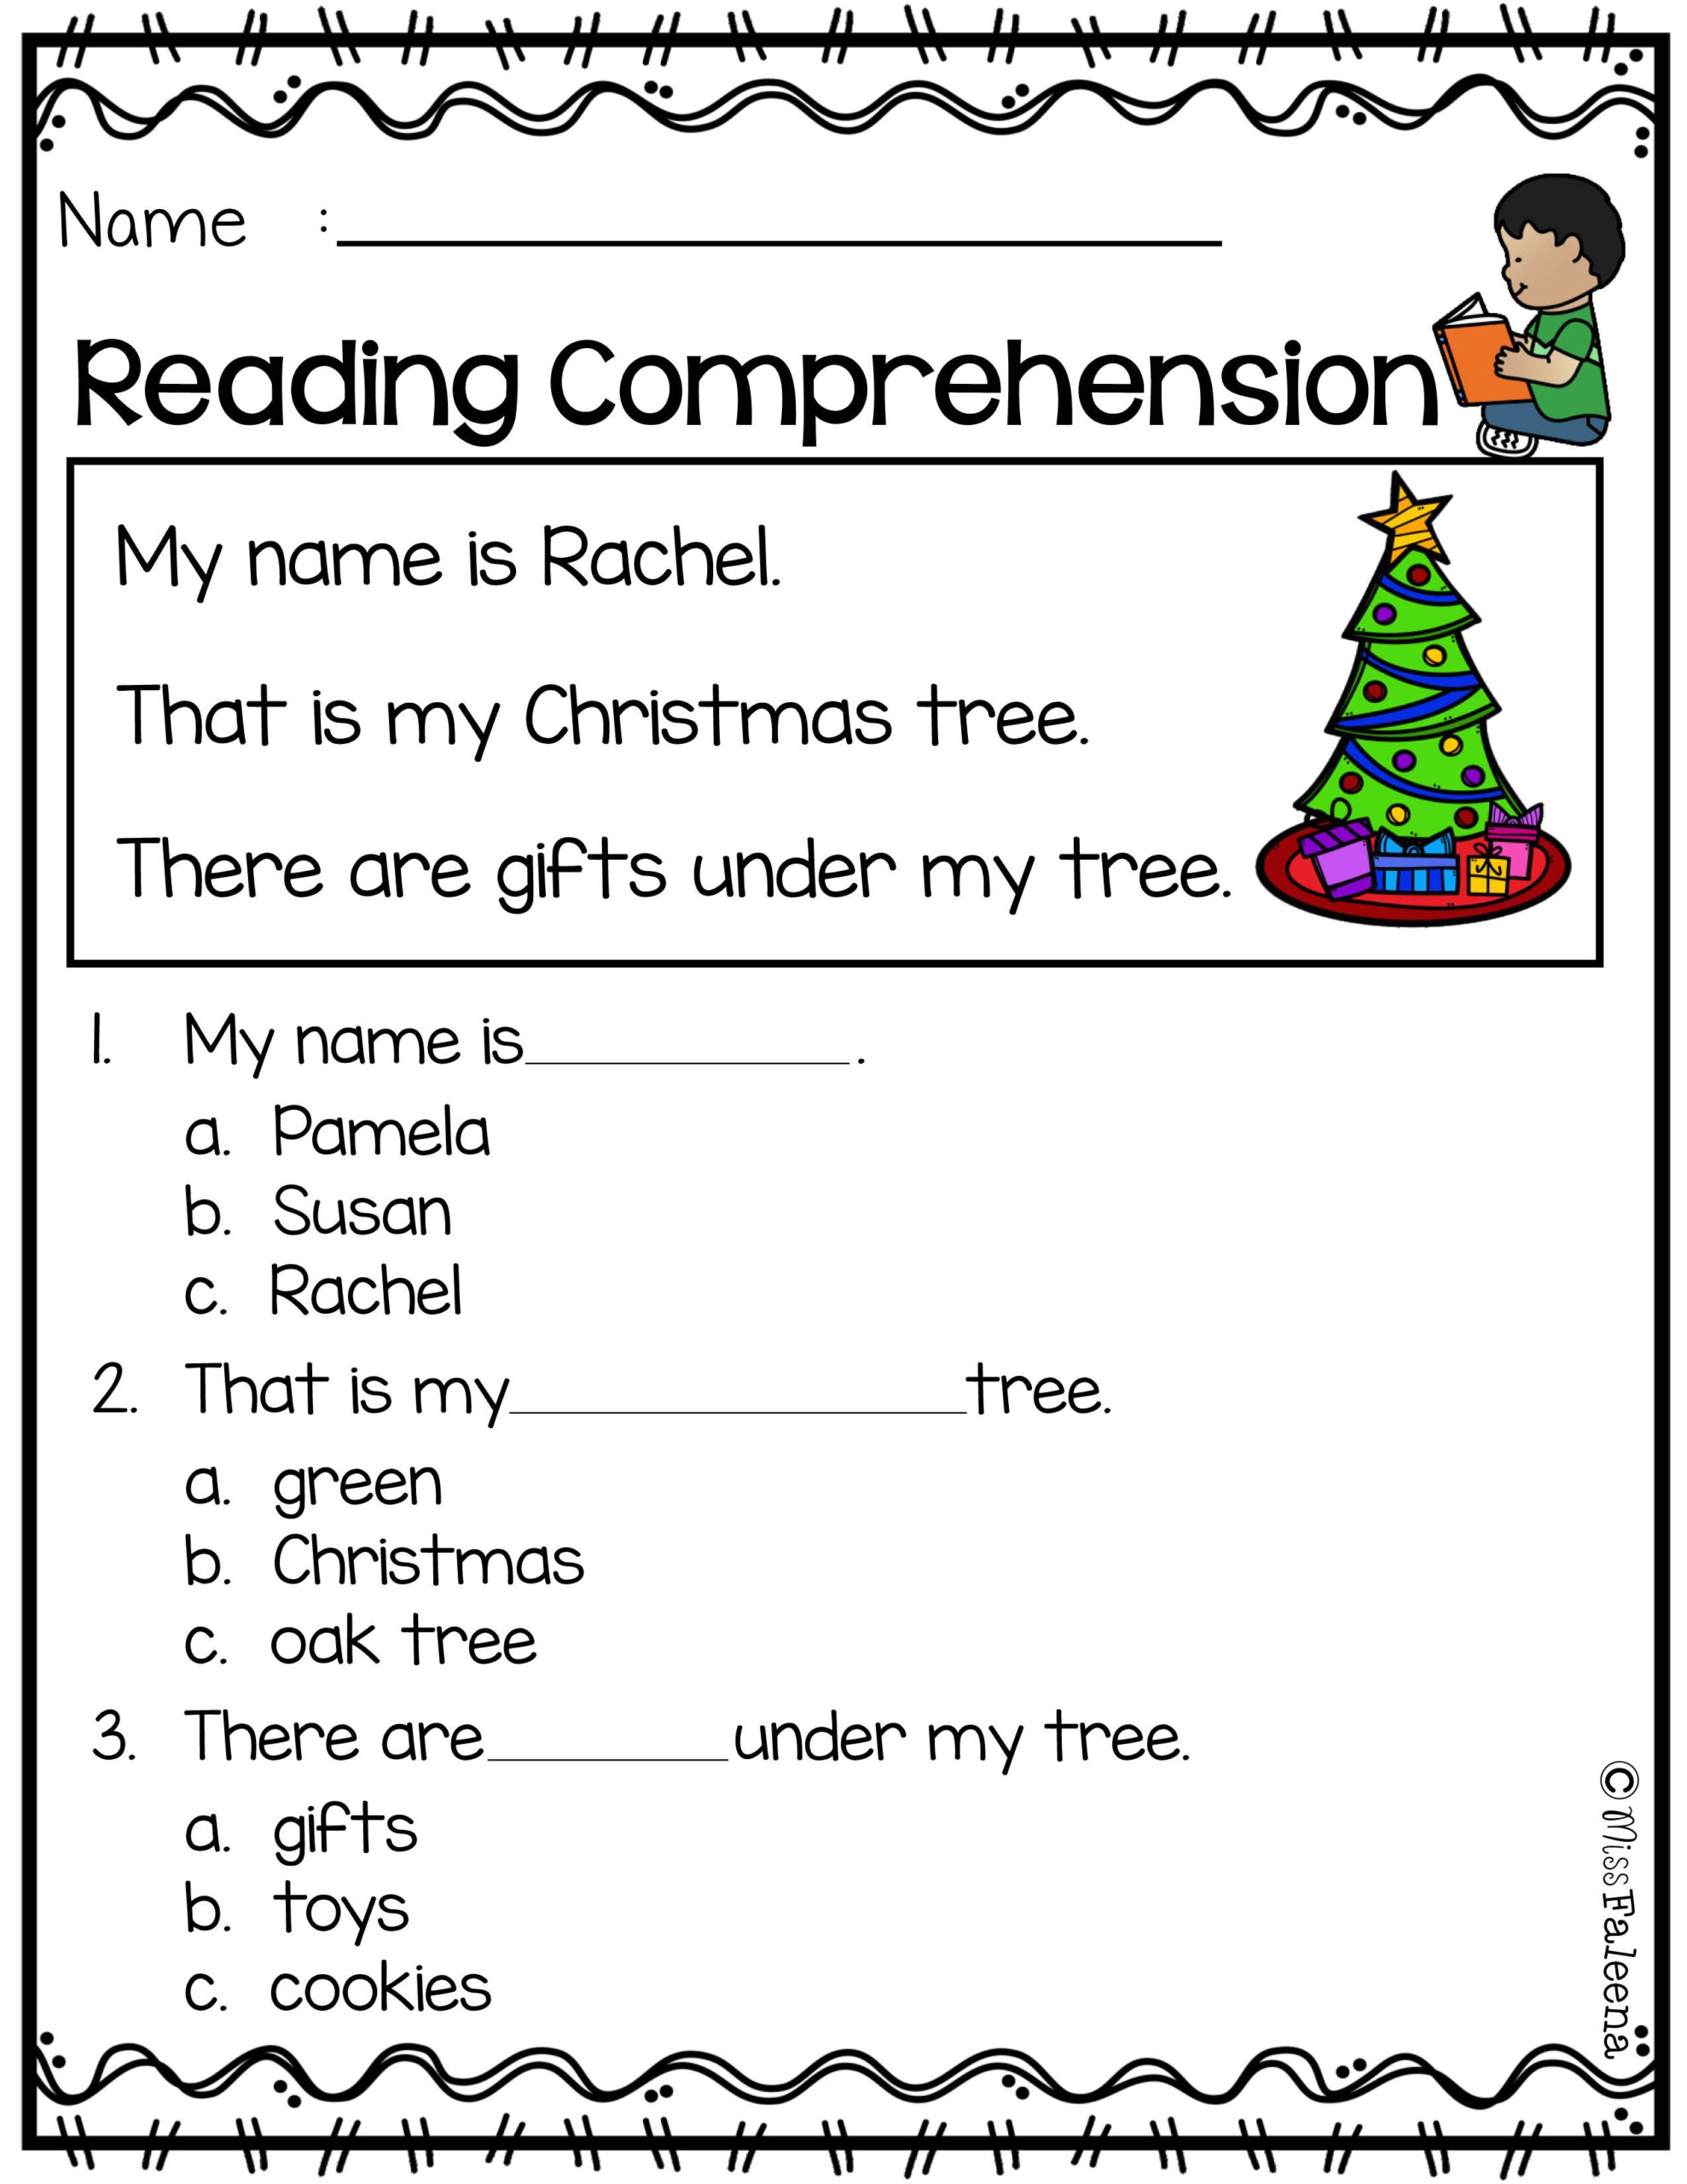 free-3rd-grade-reading-comprehension-worksheets-multiple-3rd-grade